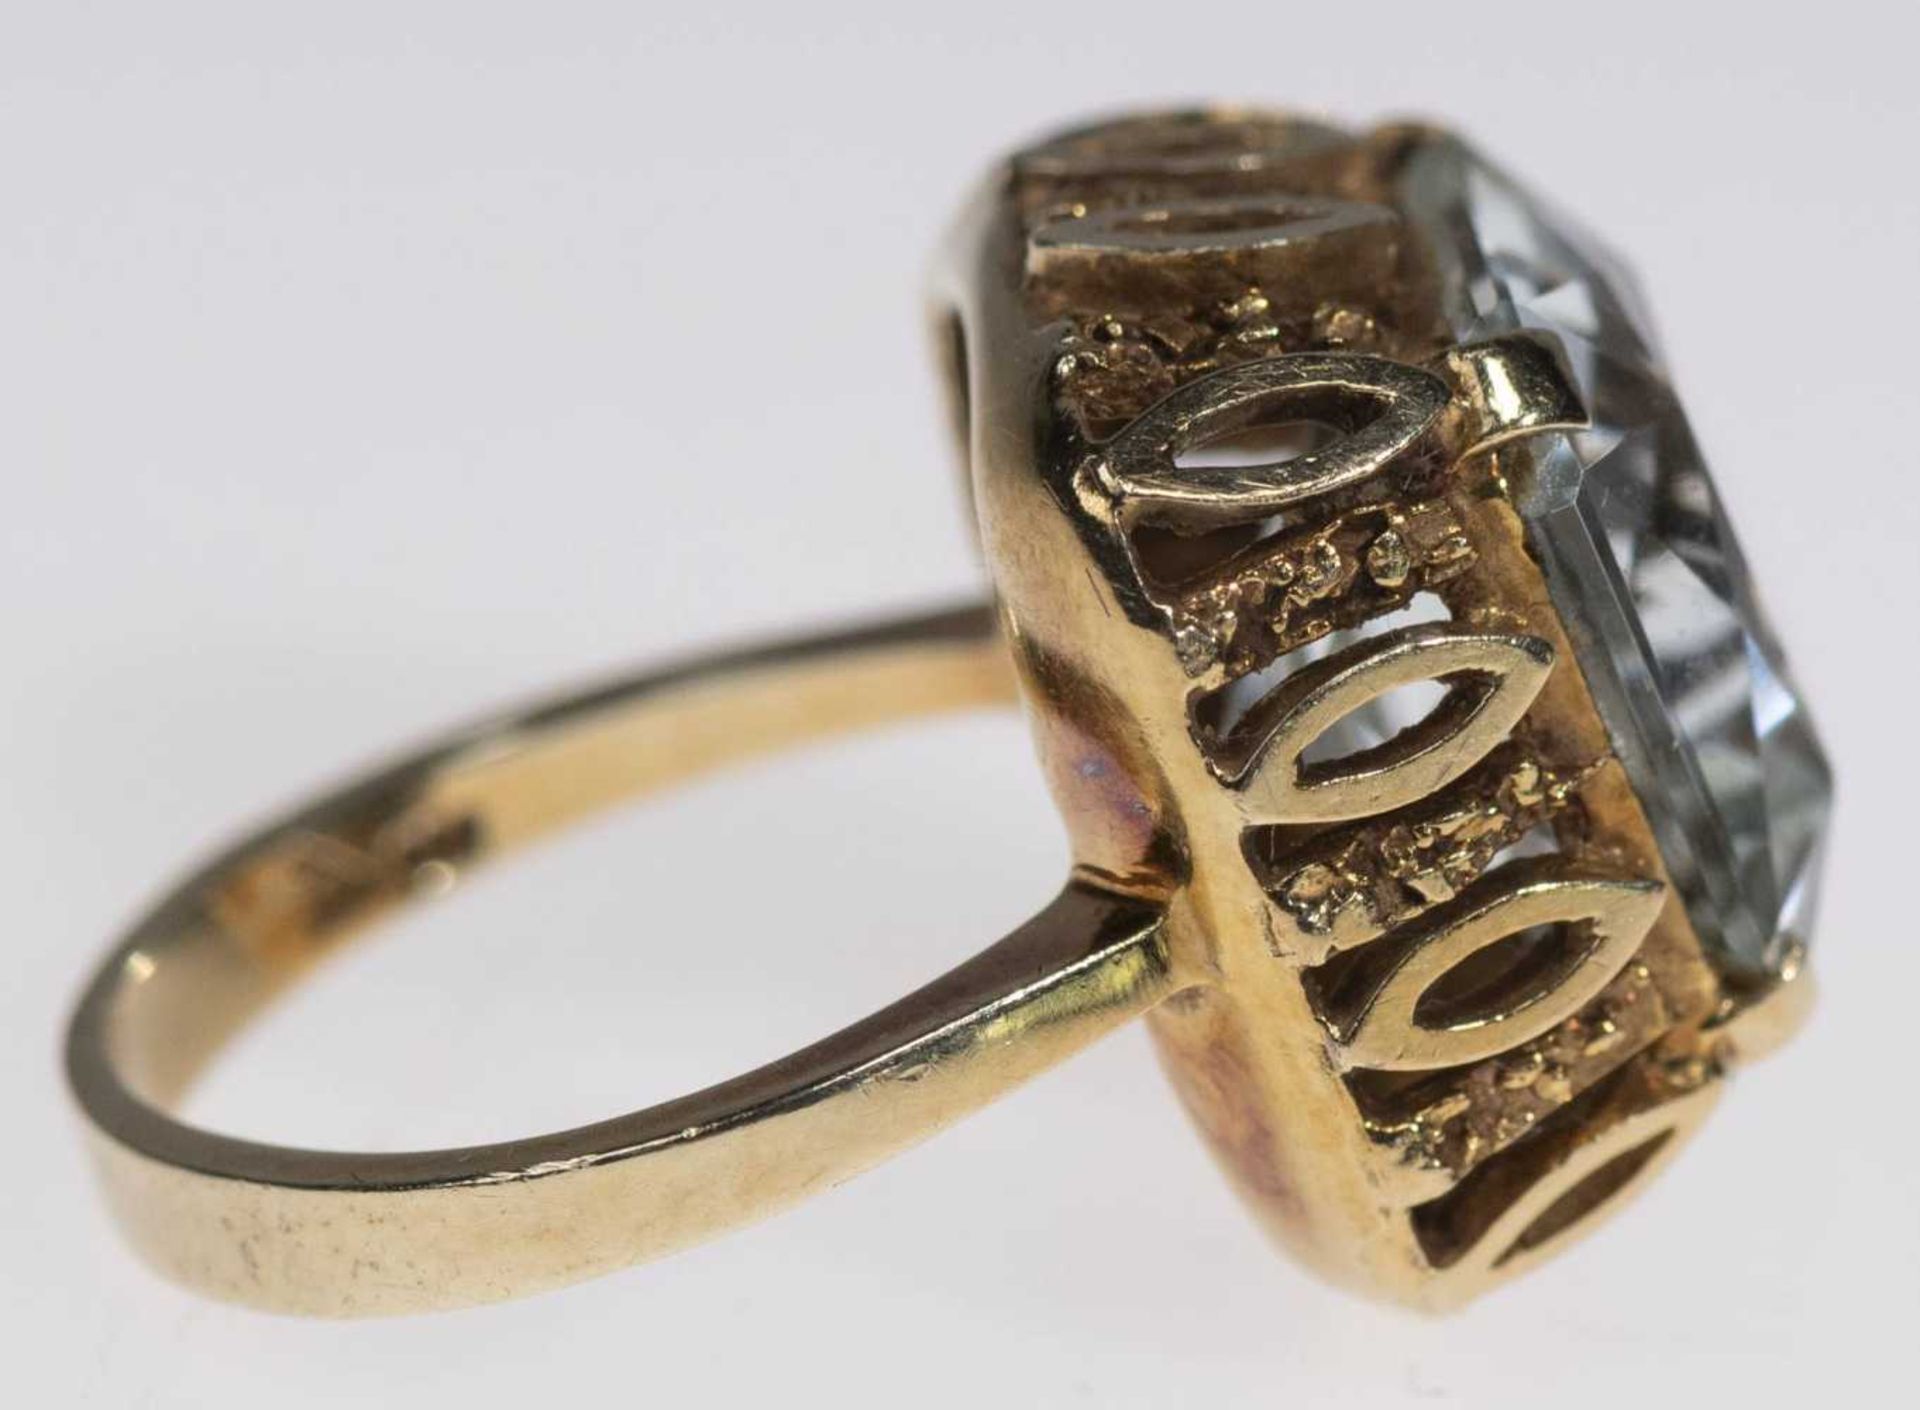 Aquamarines ring, 585 yellow gold, aquamarines in Princess cut approximate 6, 9 ct, goldsmith's work - Image 4 of 6